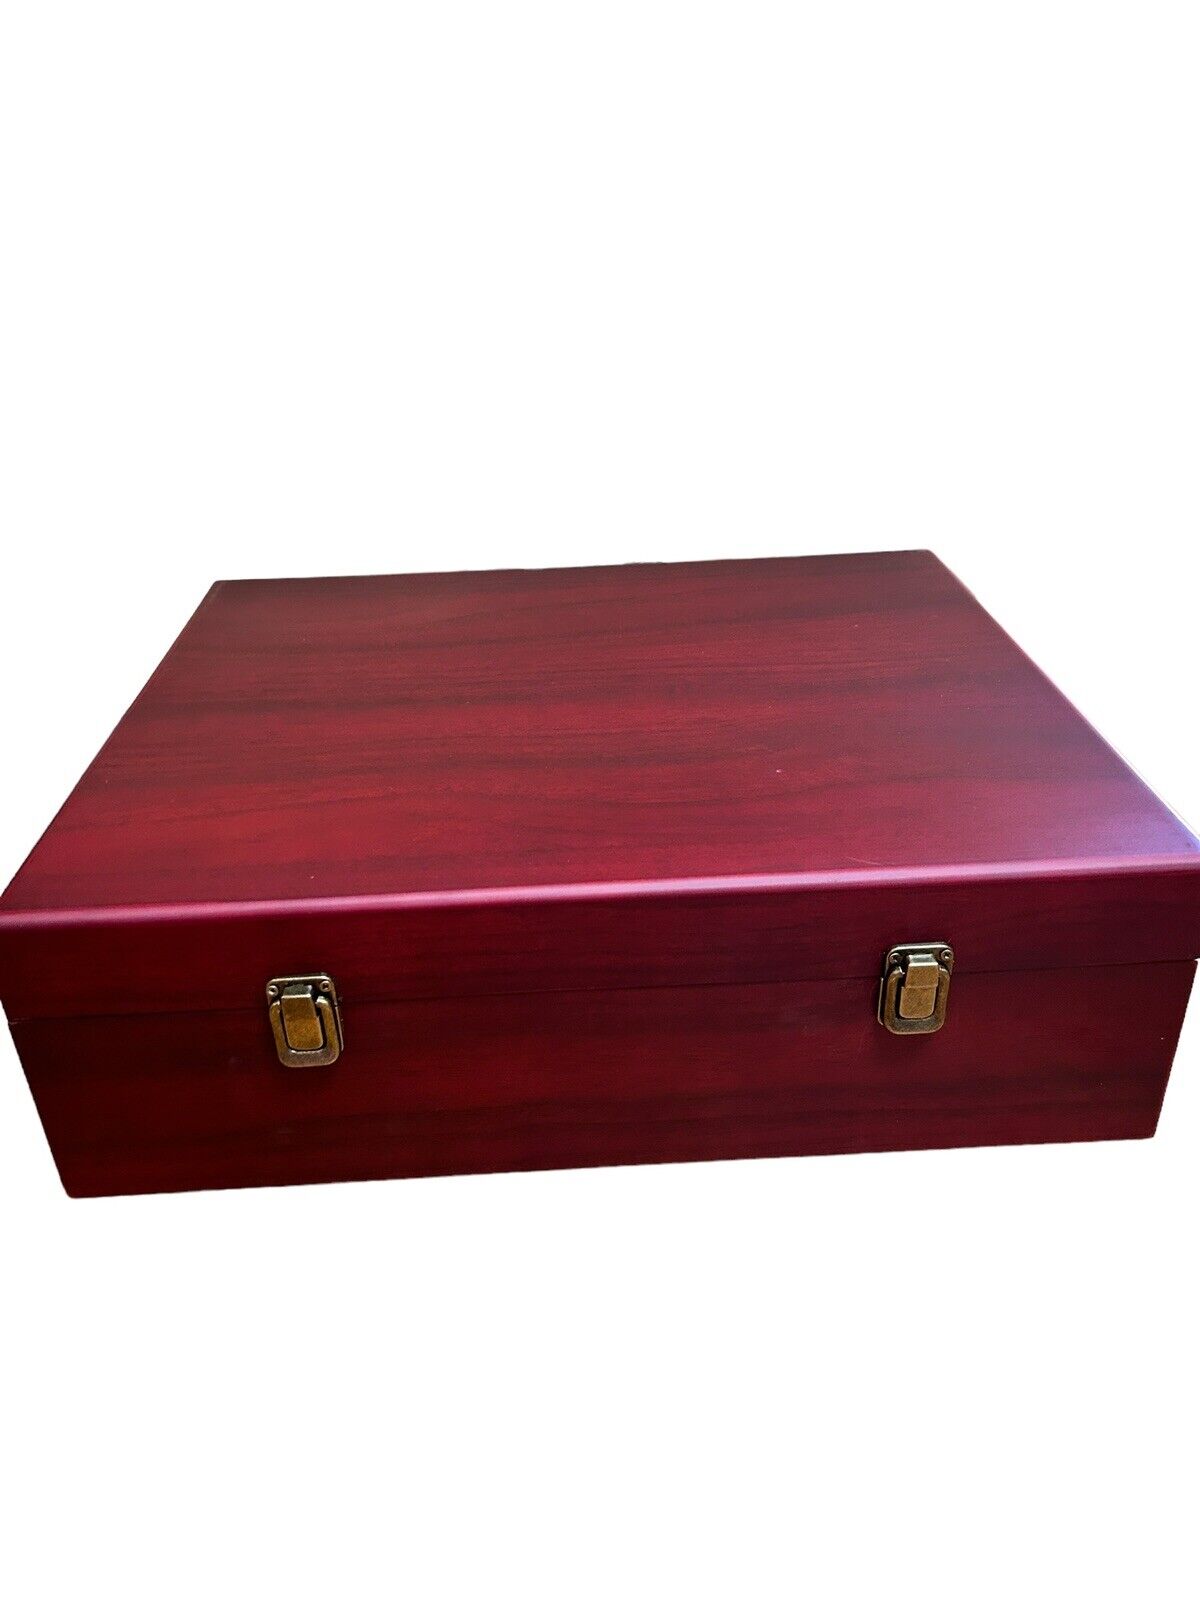 Large Wooden Box Case Latching Lid Mahogany Memory Keepsakes Decorative Sturdy